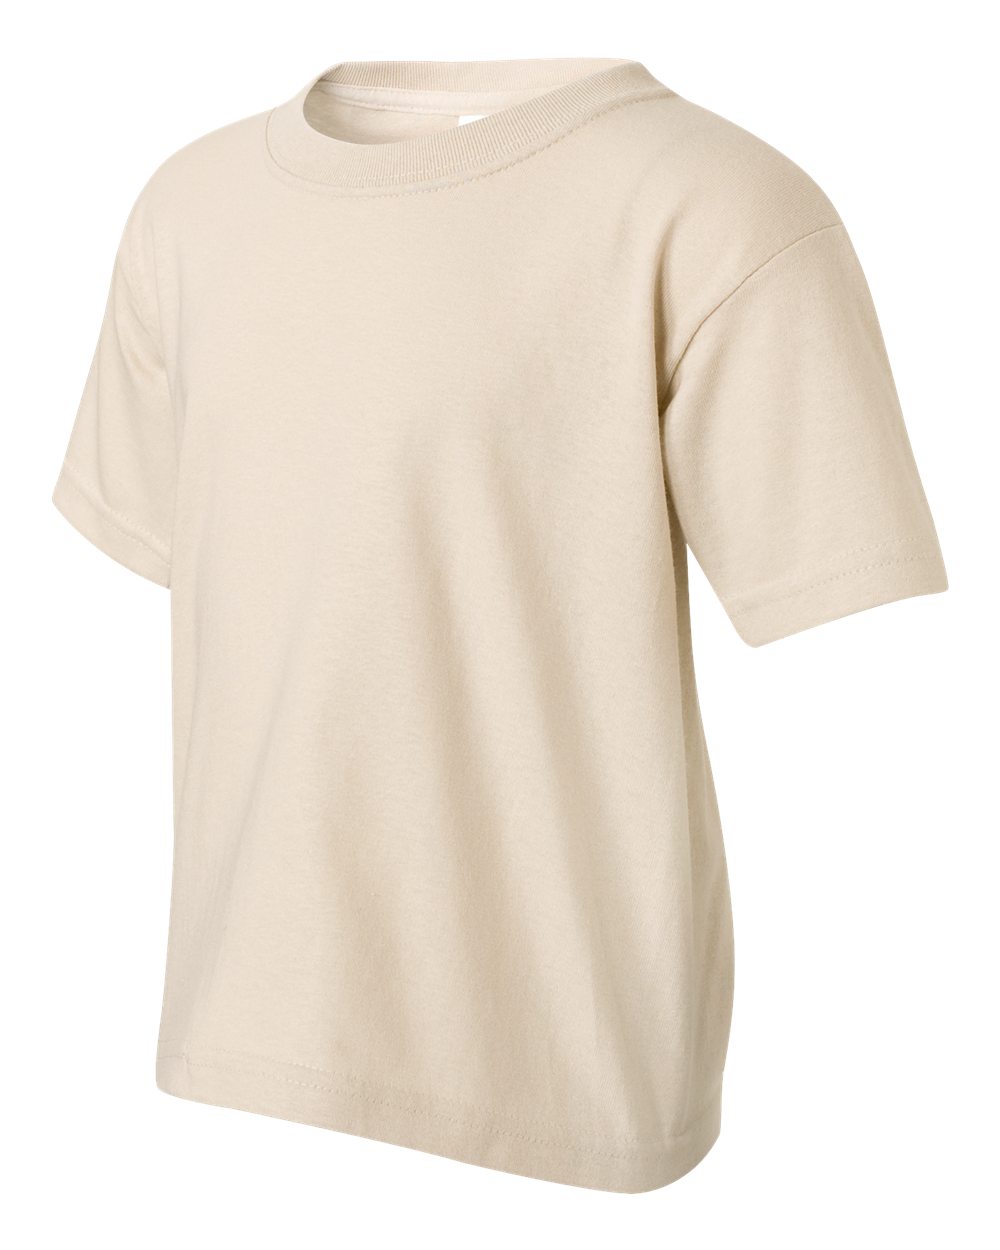 Kids Military T-Shirt - SAND